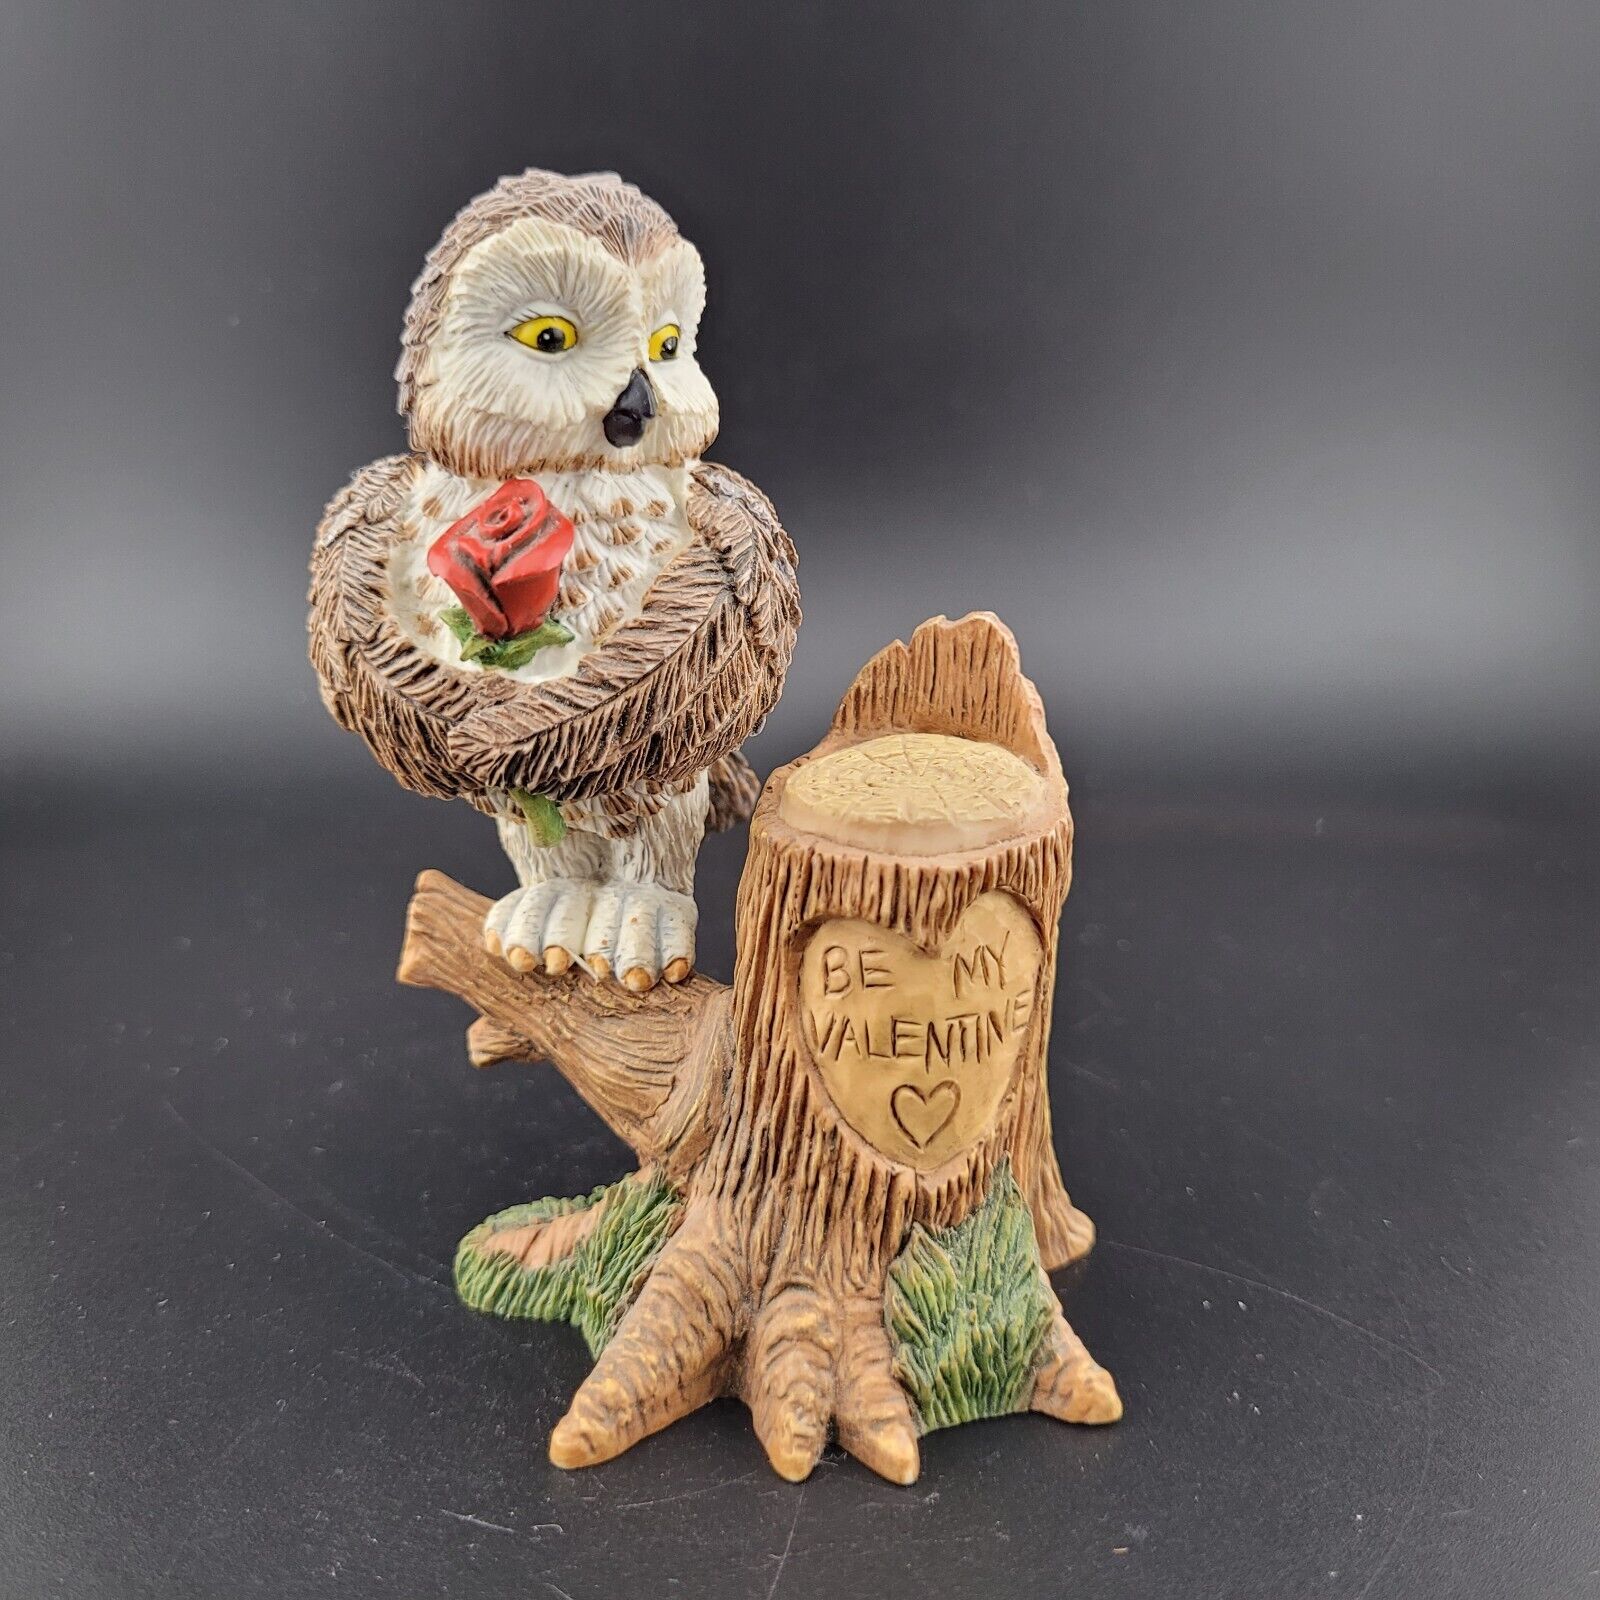 Lil Whoots Owl Be Your Valentine Figurine Happy Owlidays